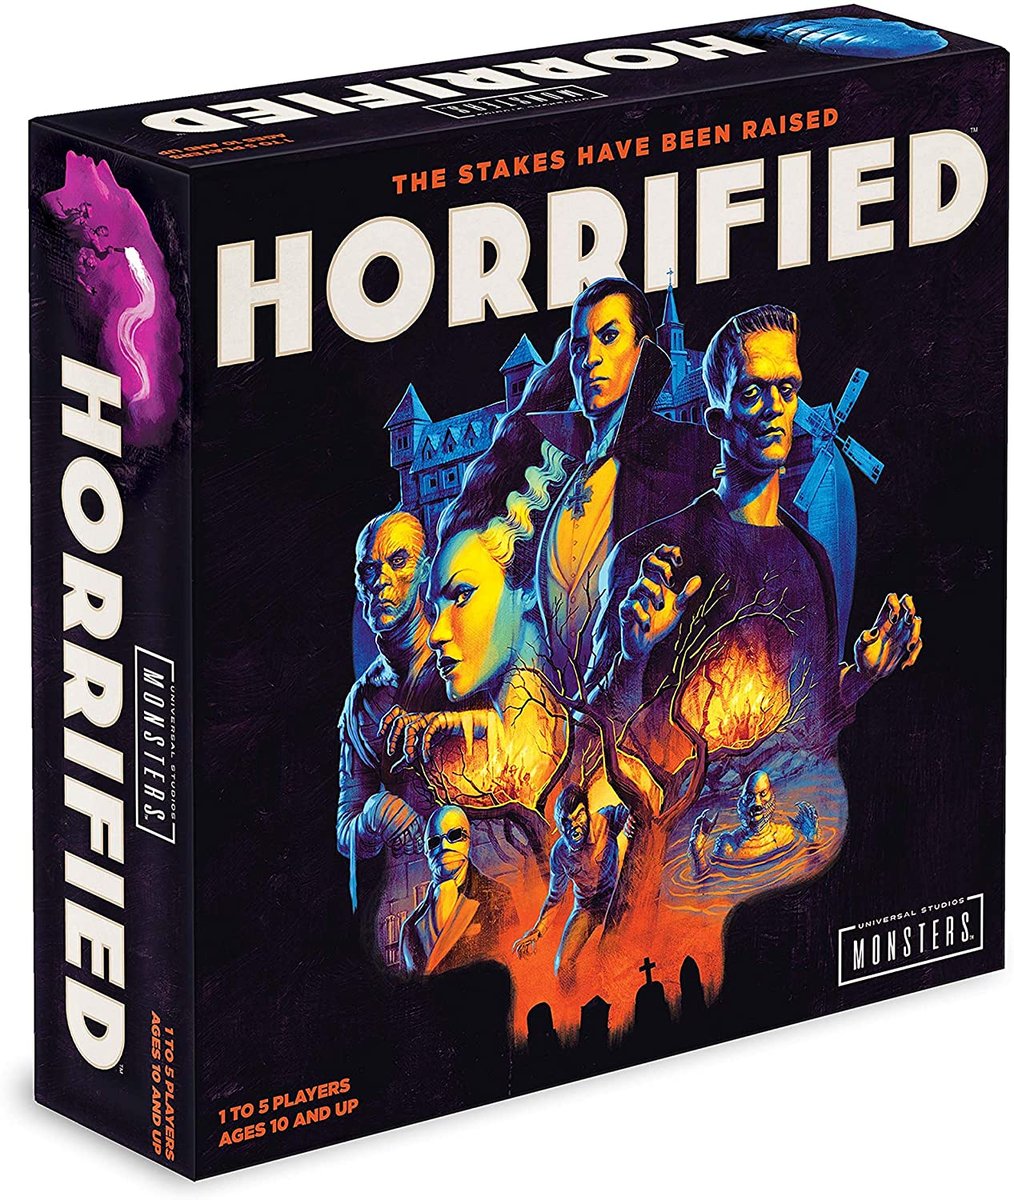 Horrified (edycja polska)